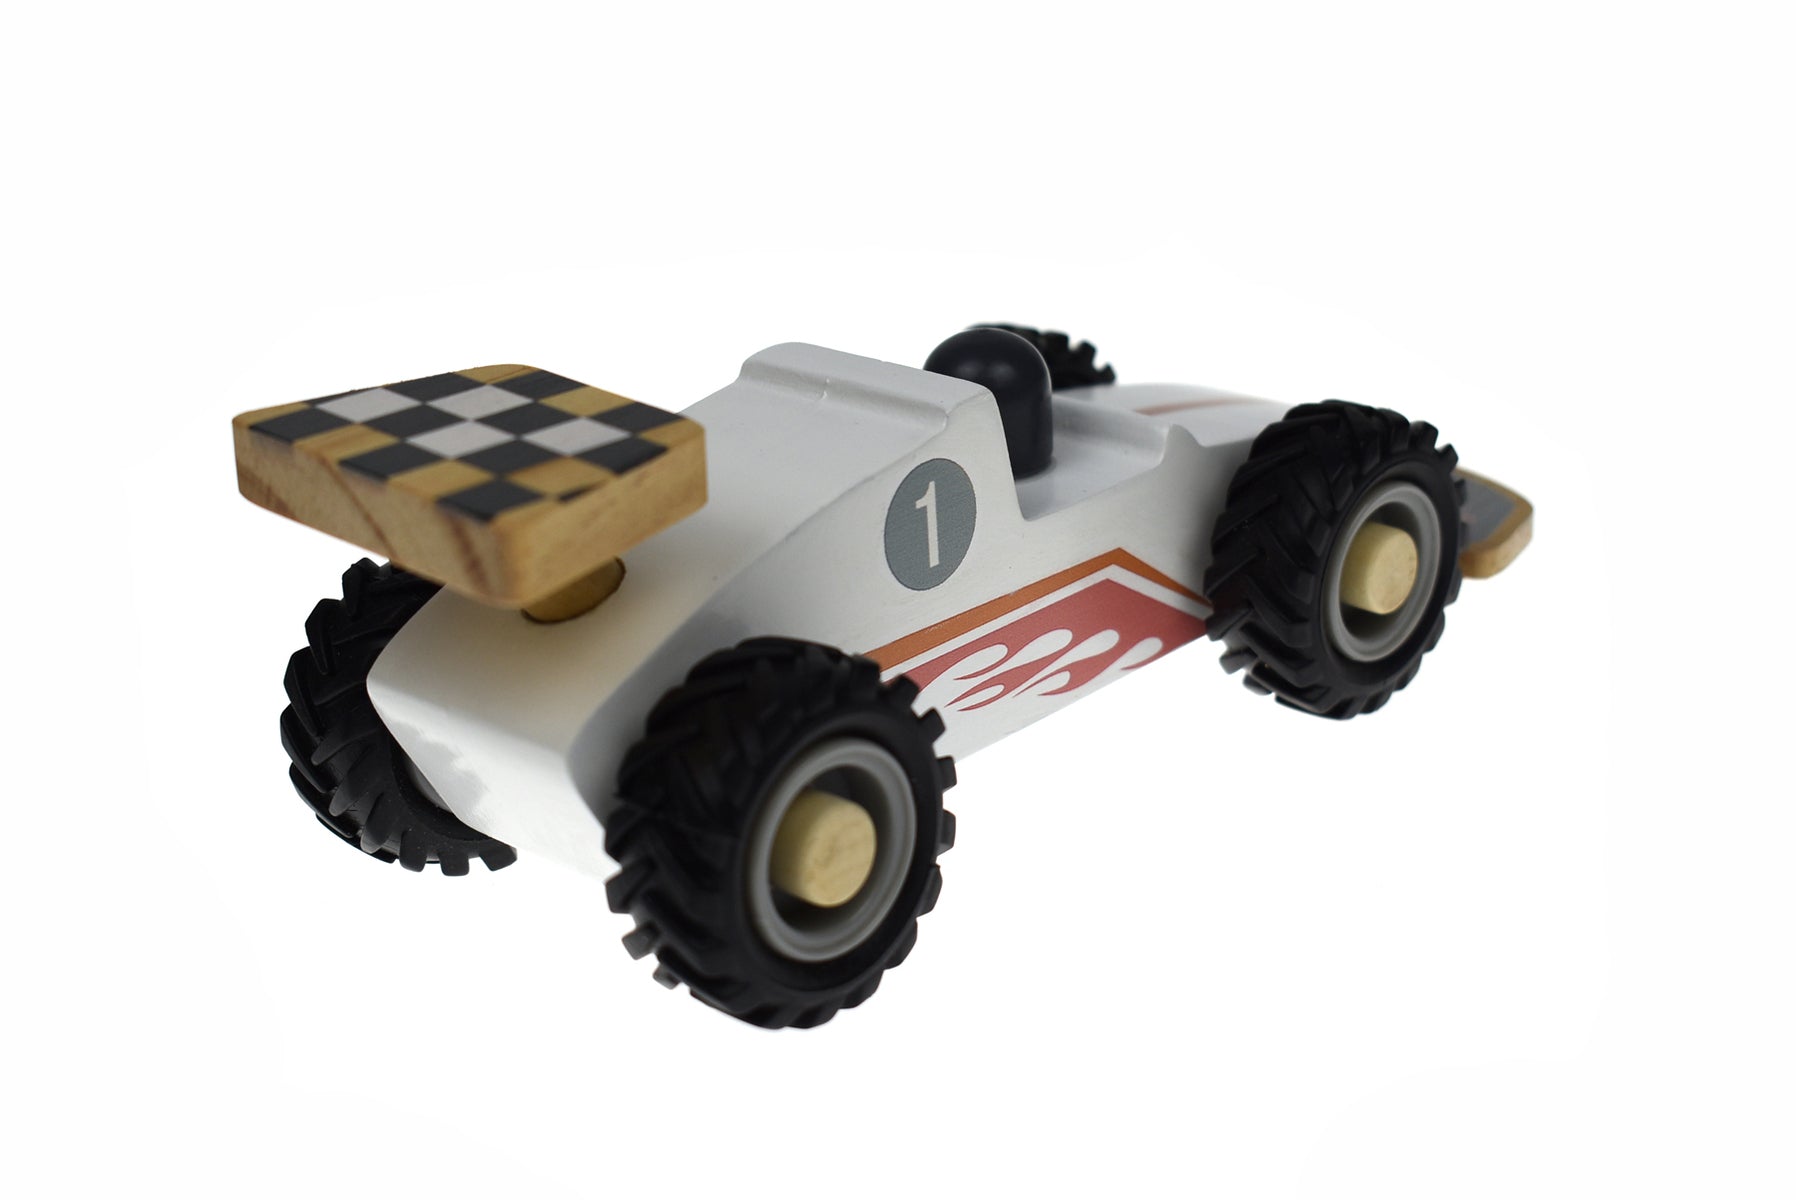 KD Wooden Racing Car White - Kids Mega Mart